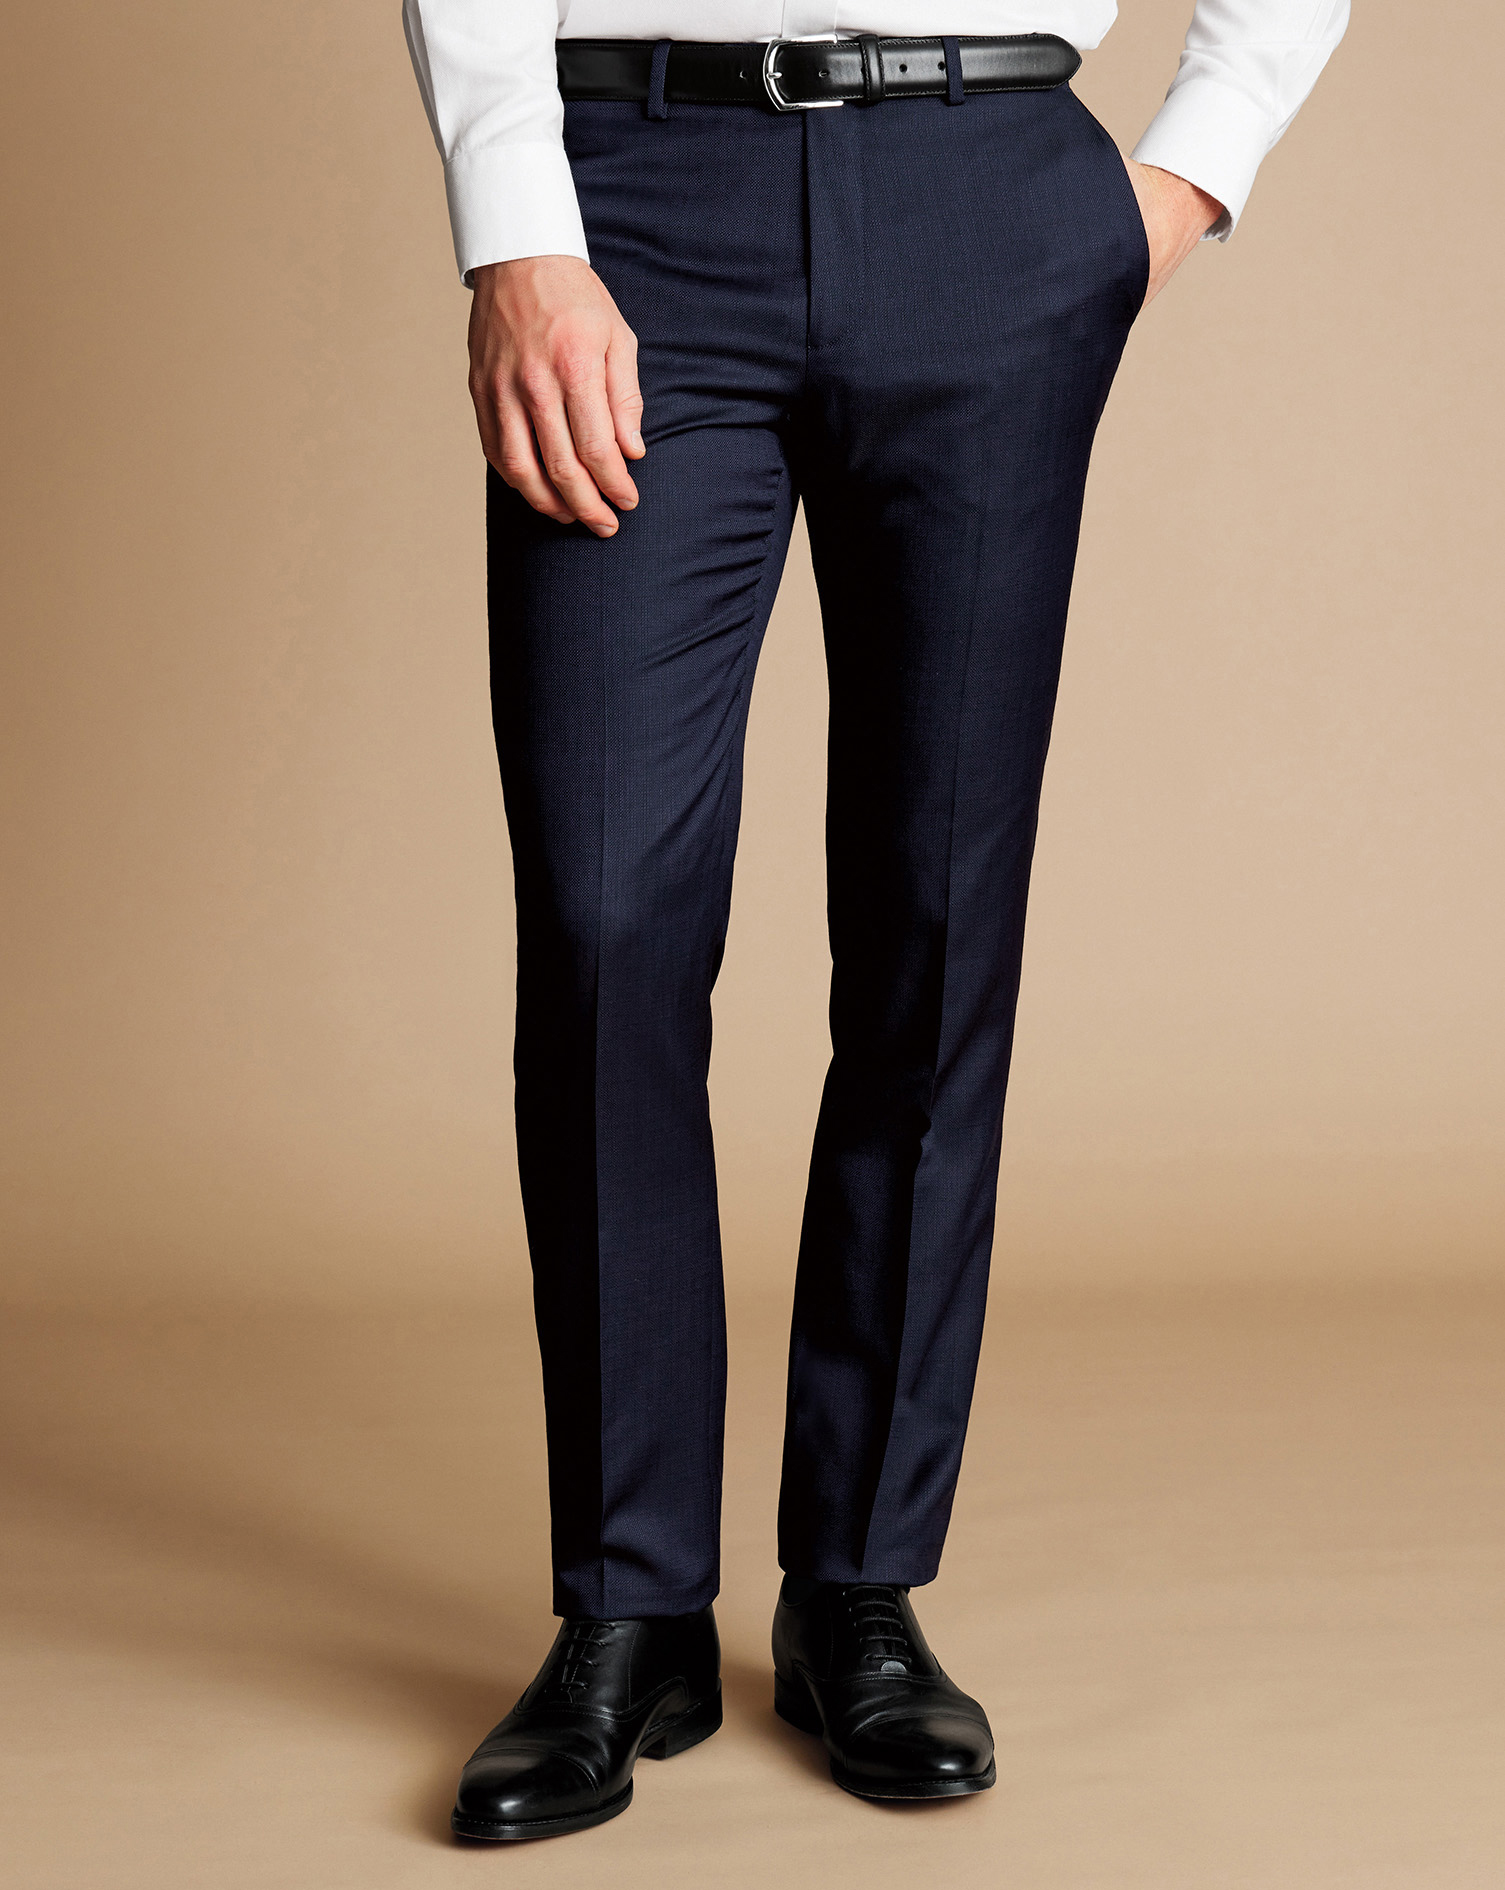 Men's Charles Tyrwhitt Italian Luxury Suit Trousers - Dark Navy Blue Size 36/38 Wool
